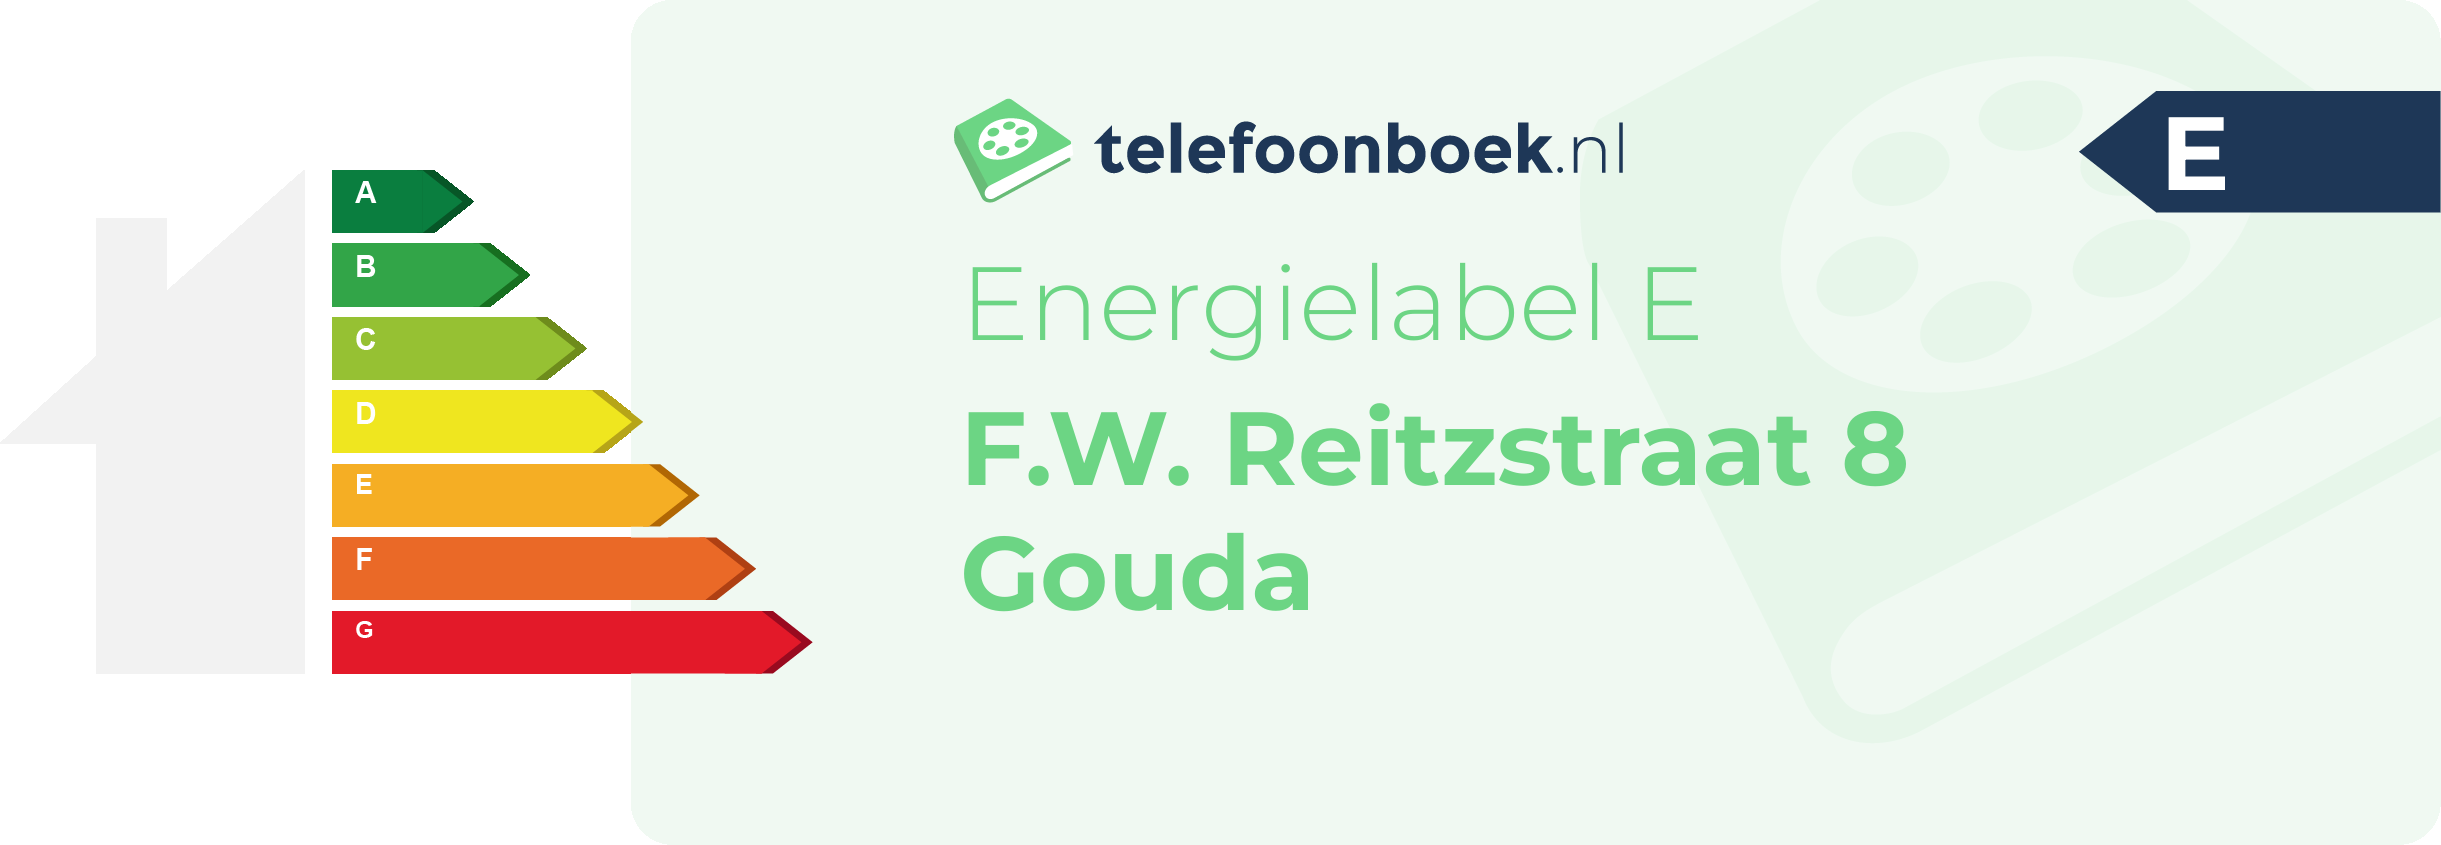 Energielabel F.W. Reitzstraat 8 Gouda